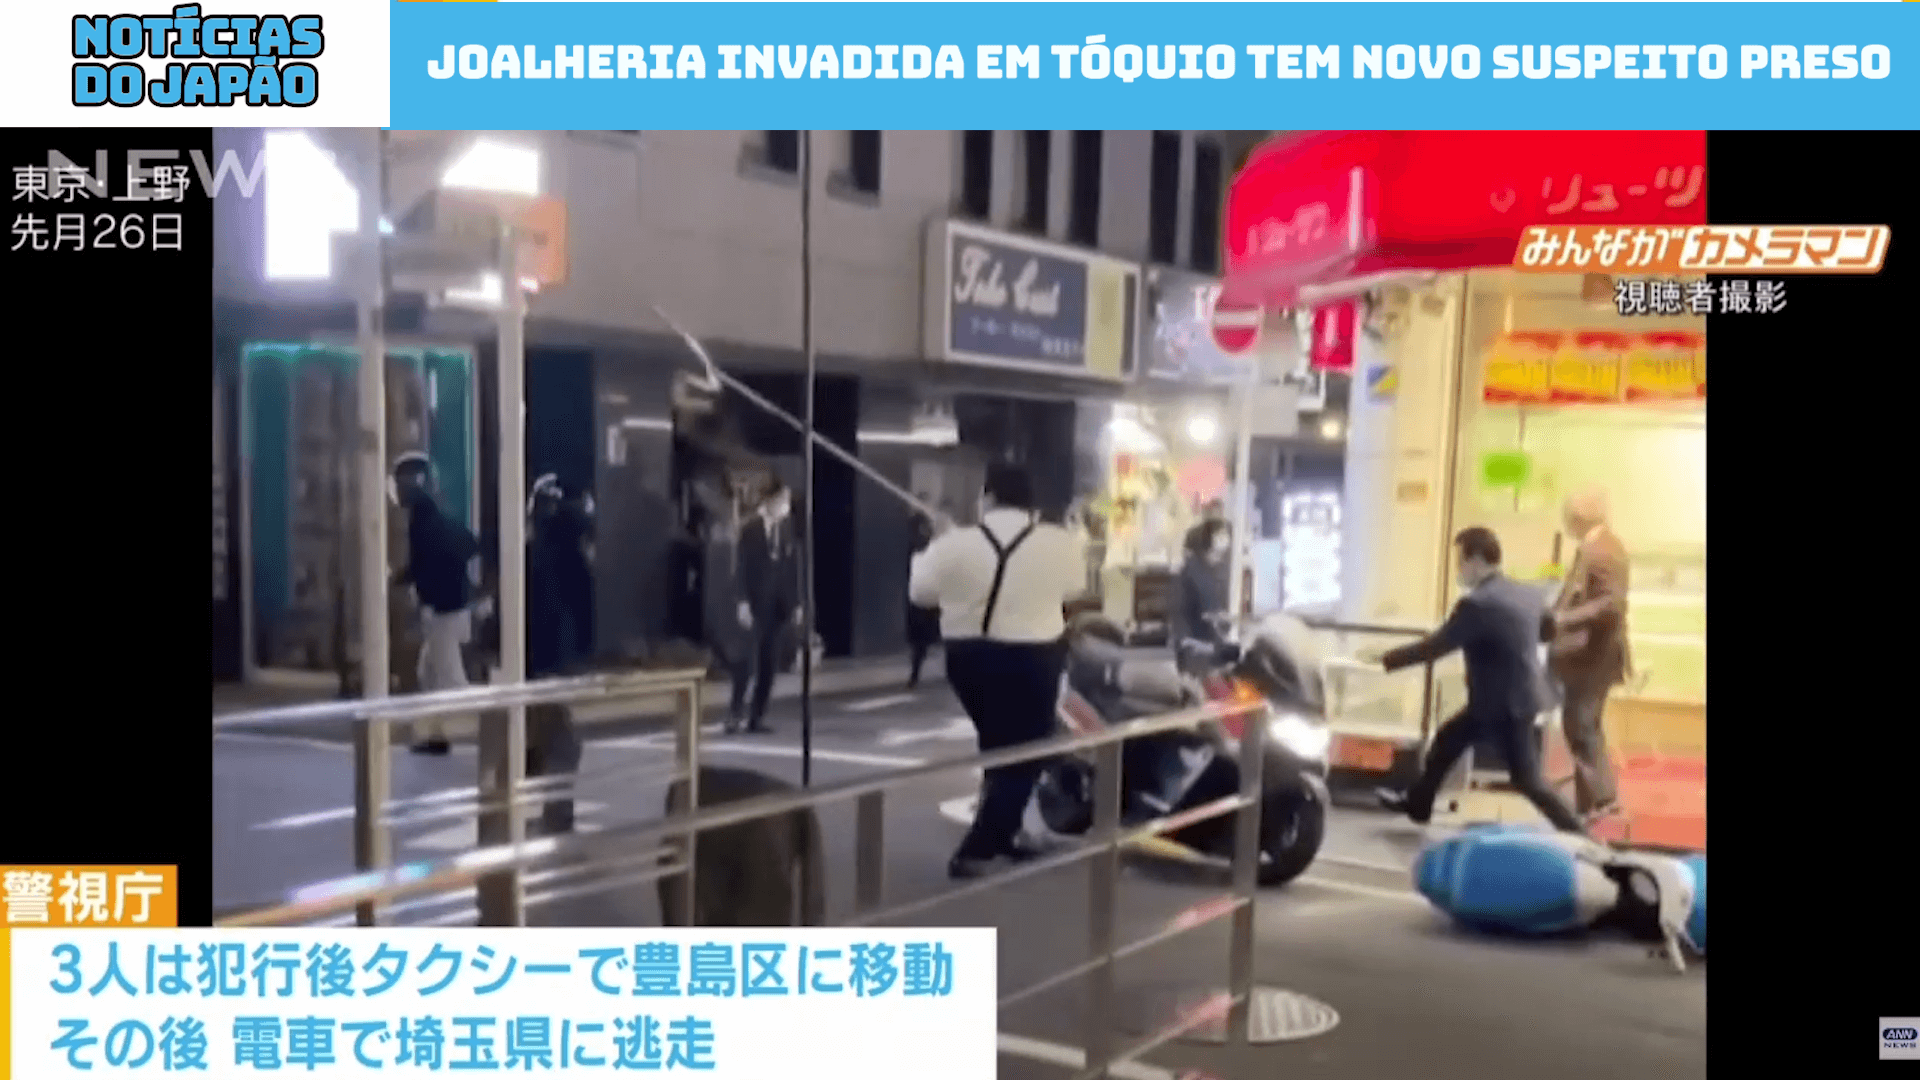 Joalheria invadida em Tóquio tem novo suspeito preso 